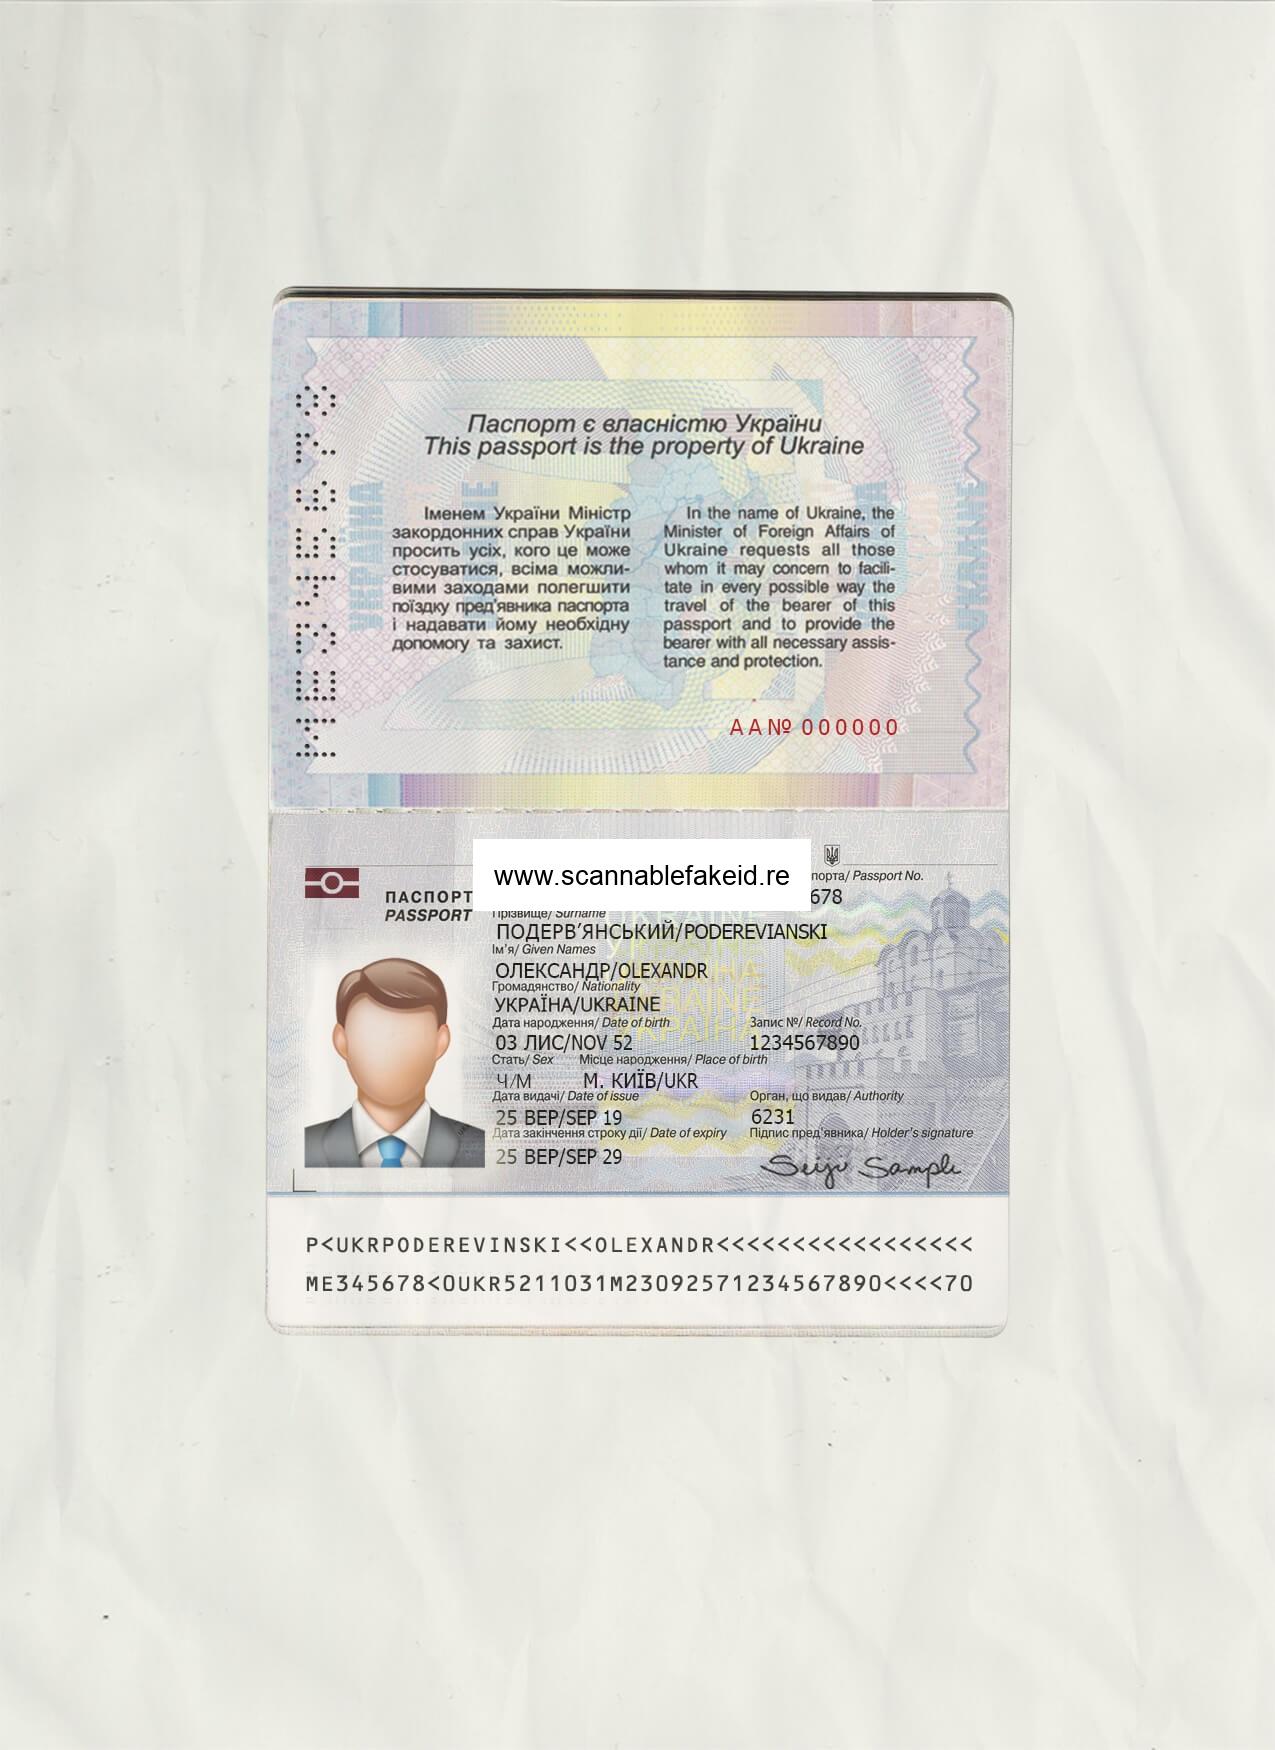 Ukraine Fake Passport - Buy Scannable Fake Id Online - Fake ID Website